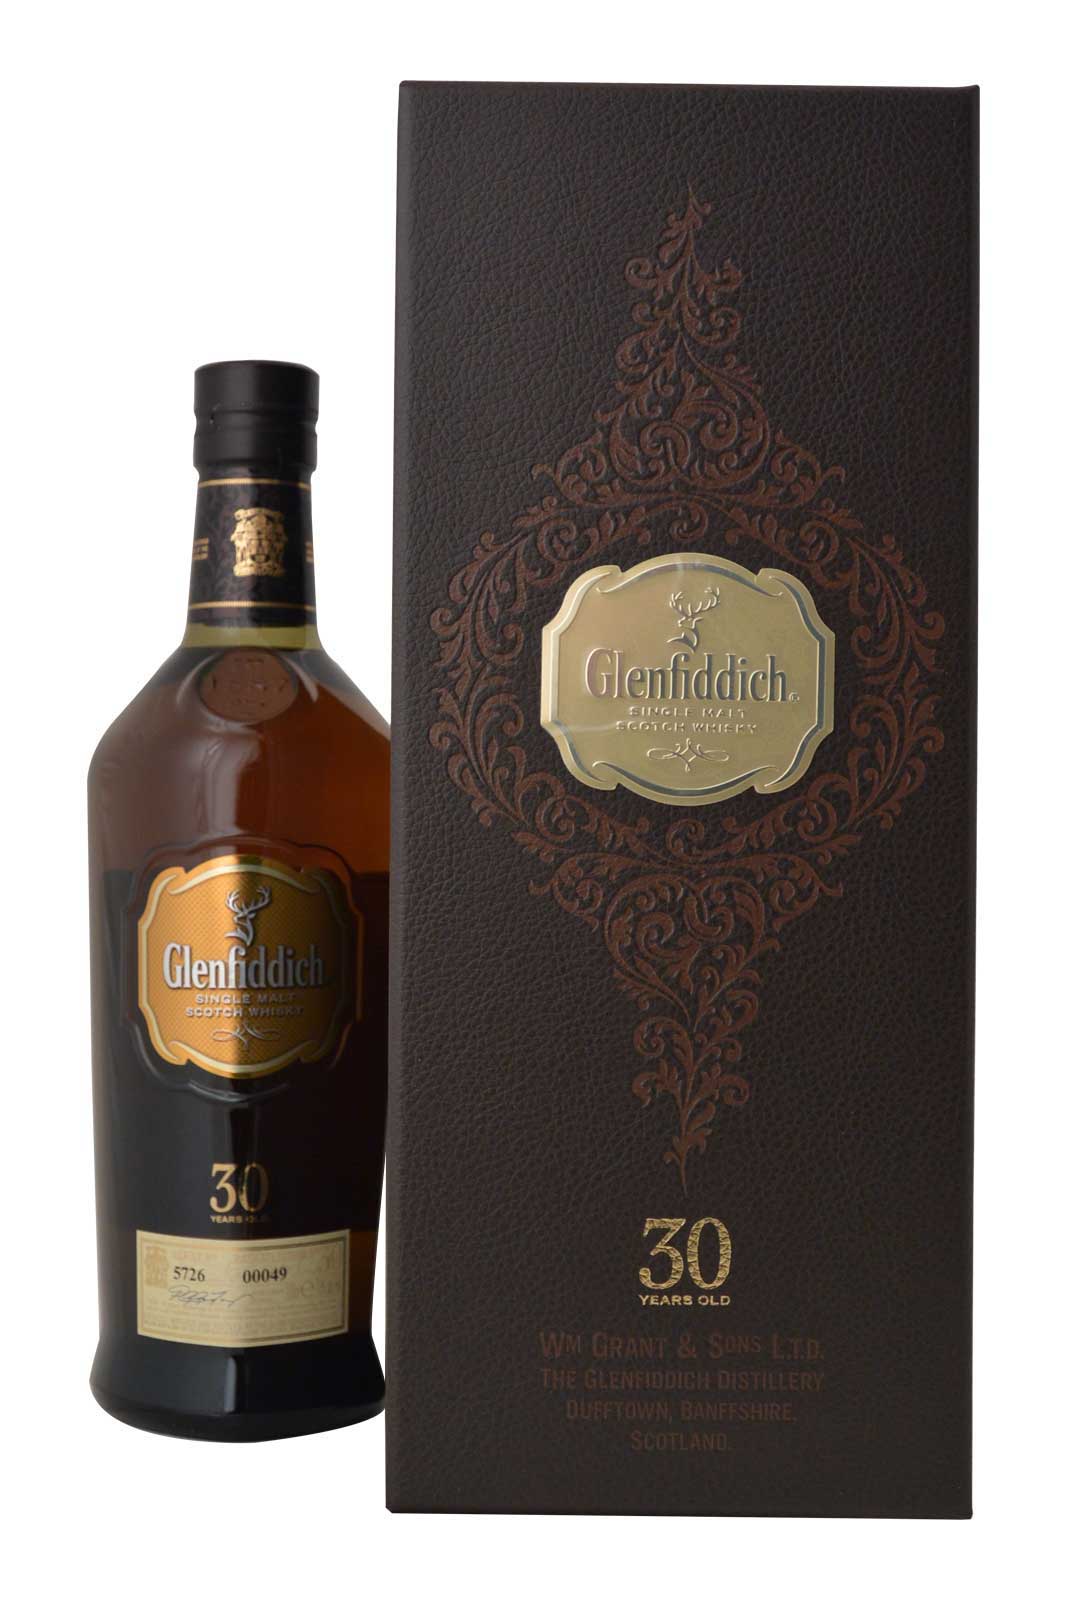 Glenfiddich 30 Year Old Bottle N°5726 Cask 00049